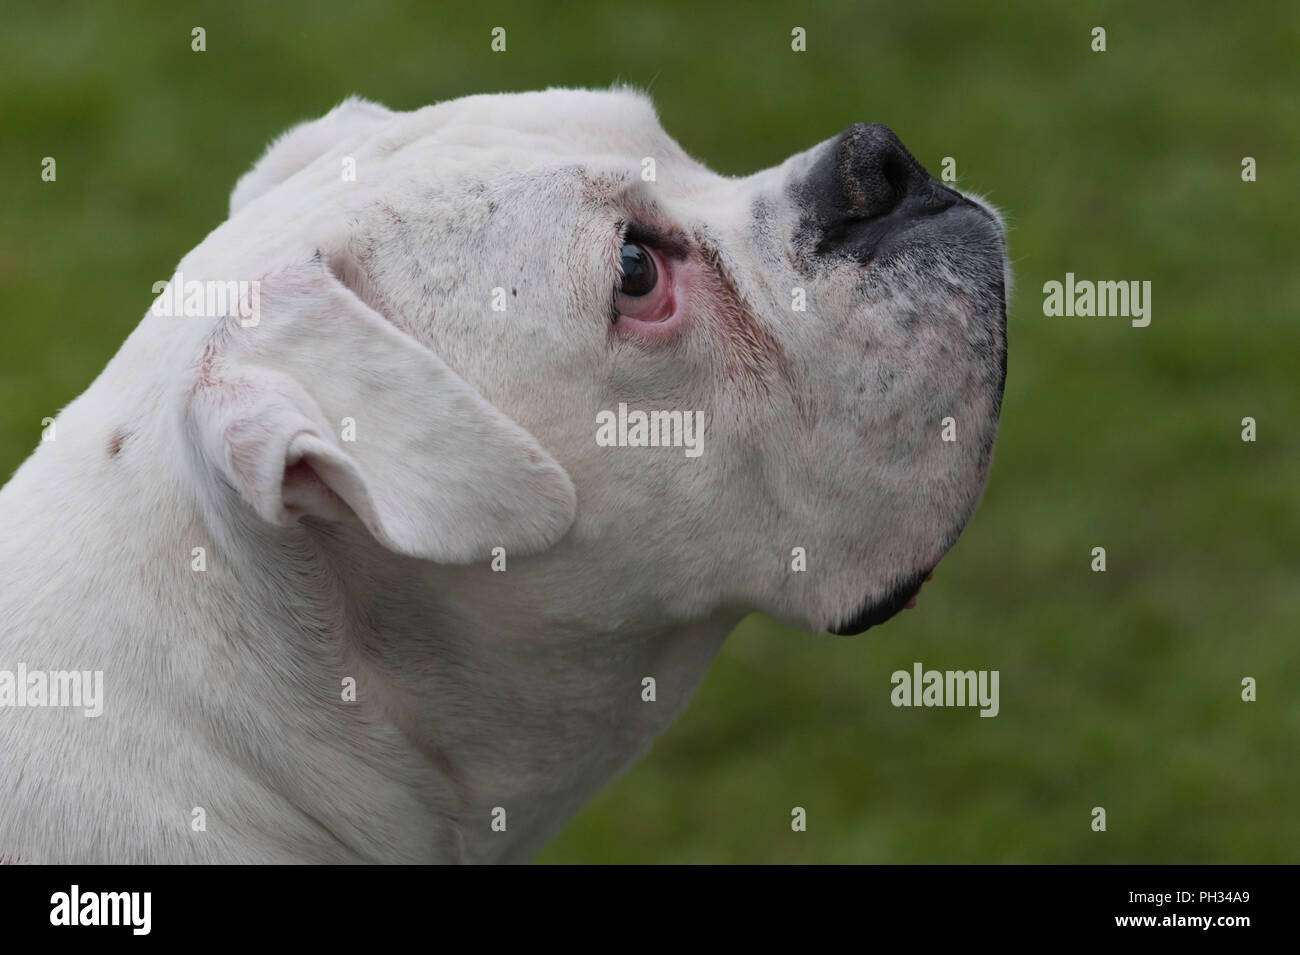 White Boxer Dog Portrait Stock Photo